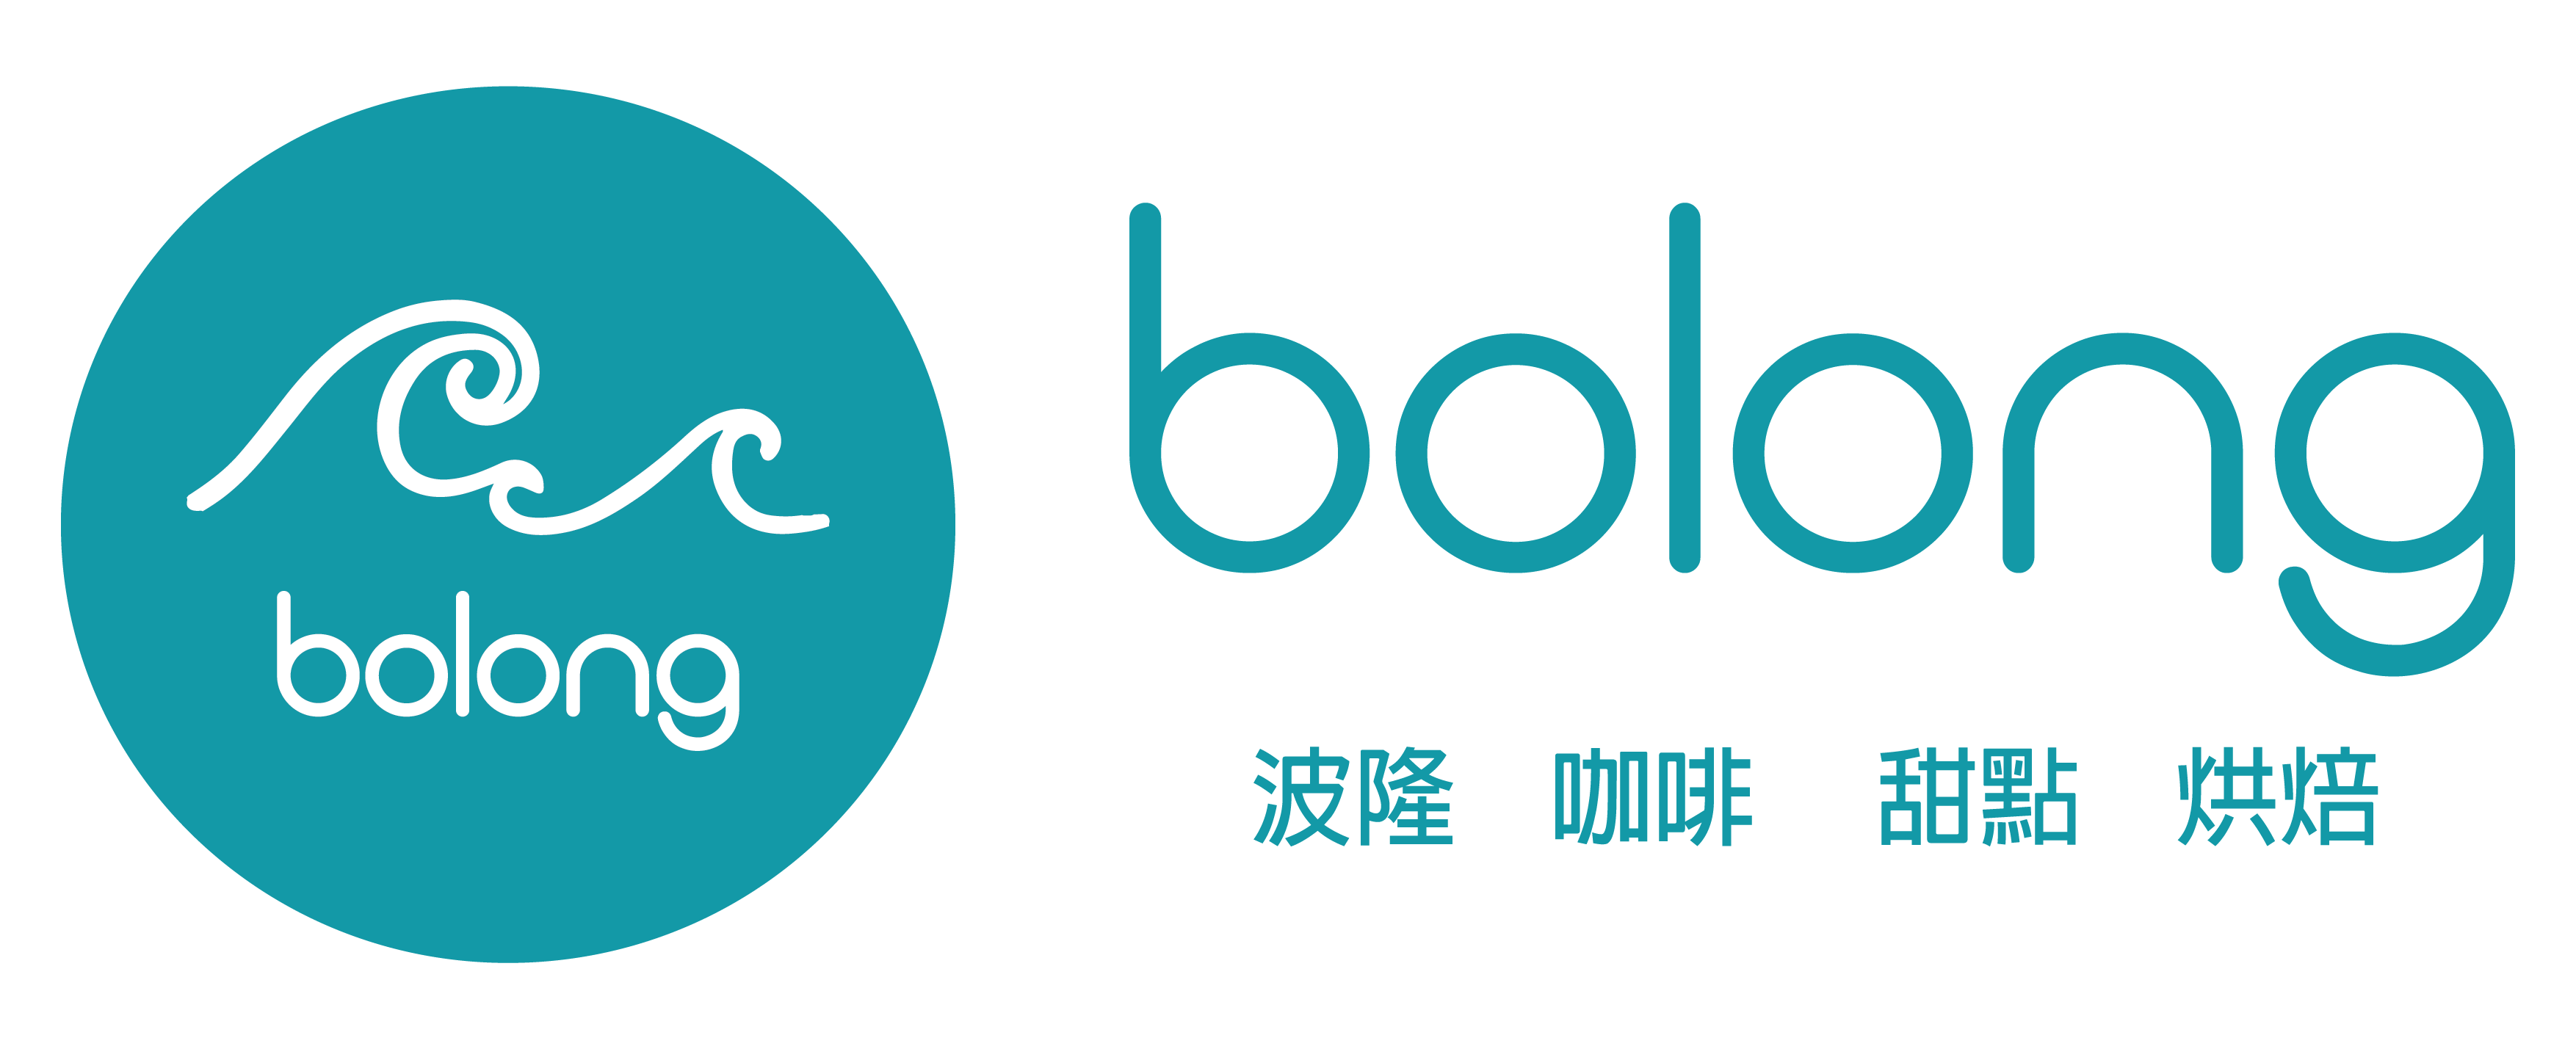 bolong logo 01 李幸純